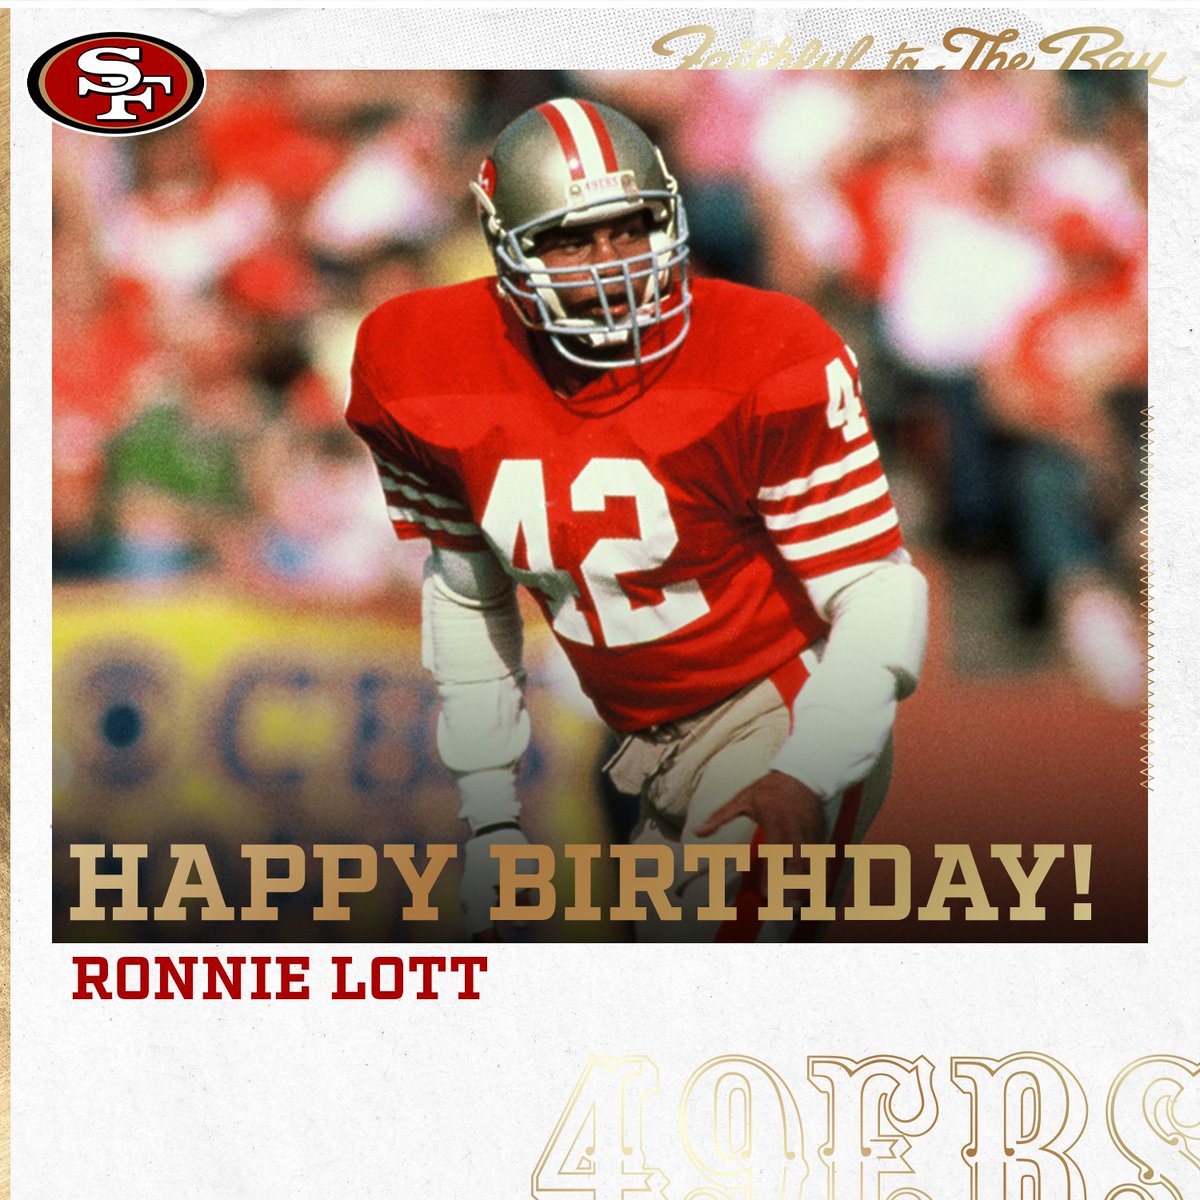 Happy birthday @RonnieLottHOF! 🎉